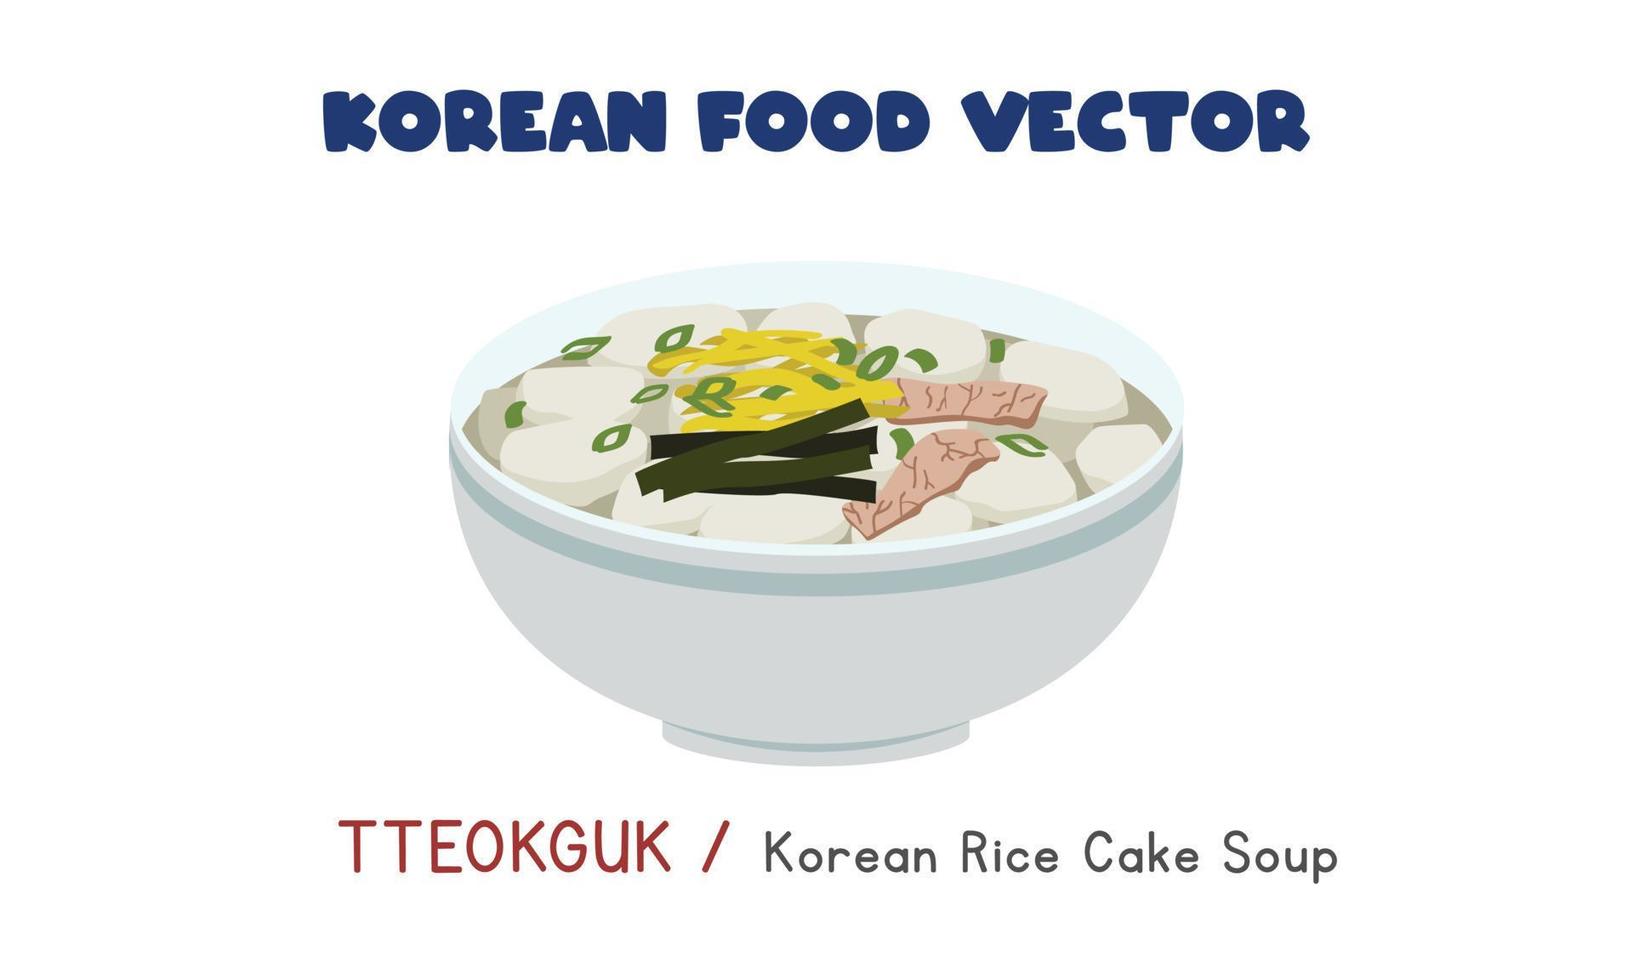 Korean Tteokguk - Korean rice cake soup flat vector design illustration, clipart cartoon style. Asian food. Korean cuisine. Korean New Year food